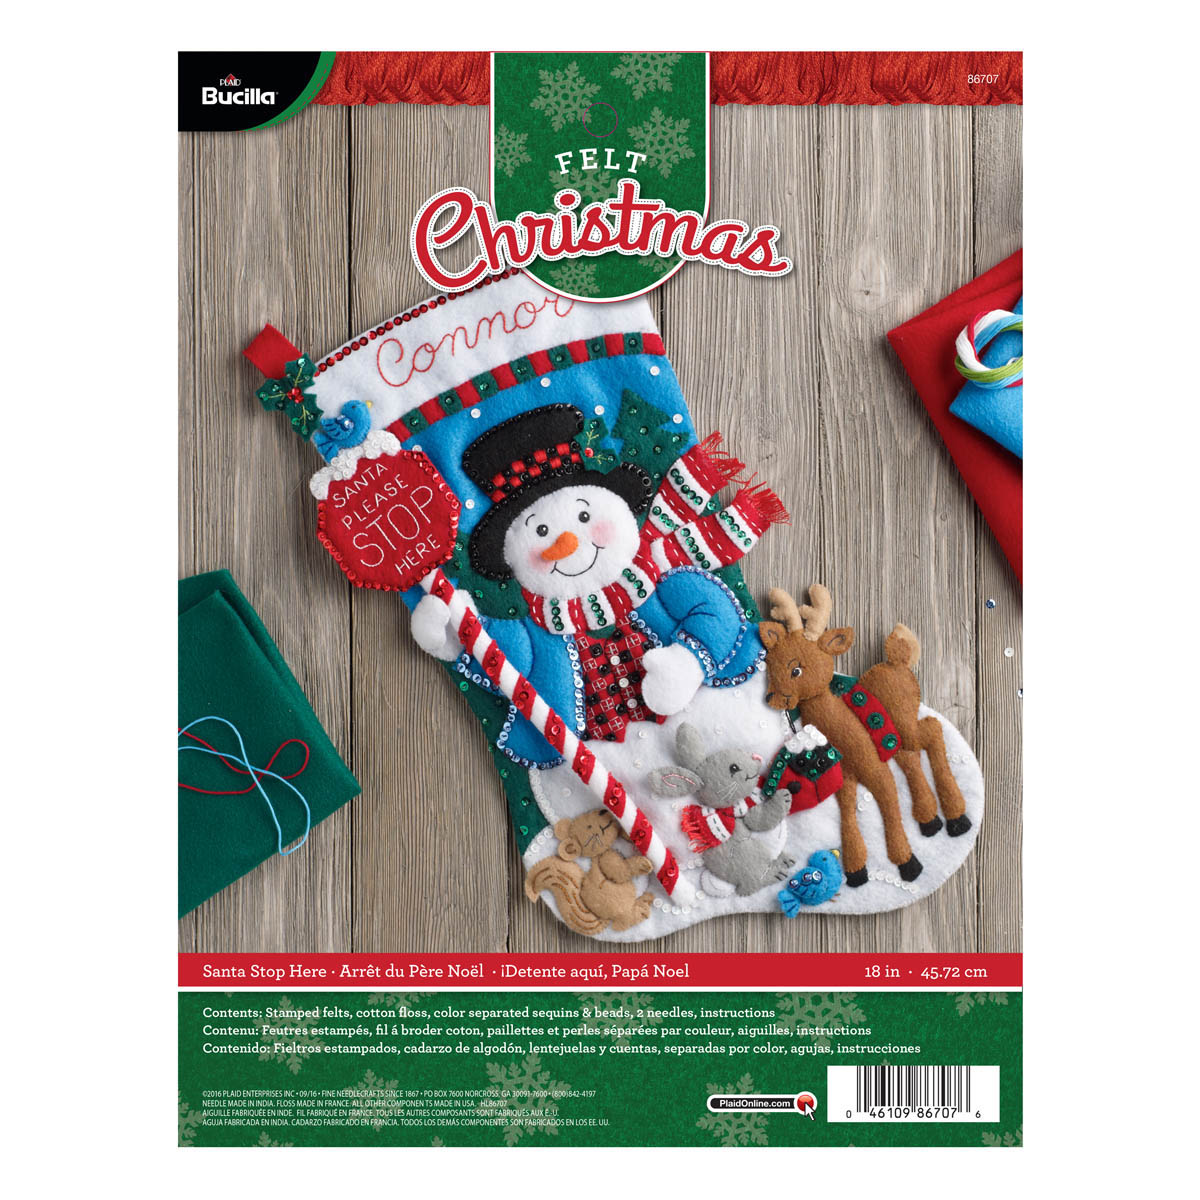 Shop Plaid Bucilla ® Seasonal - Felt - Stocking Kits - Santa's